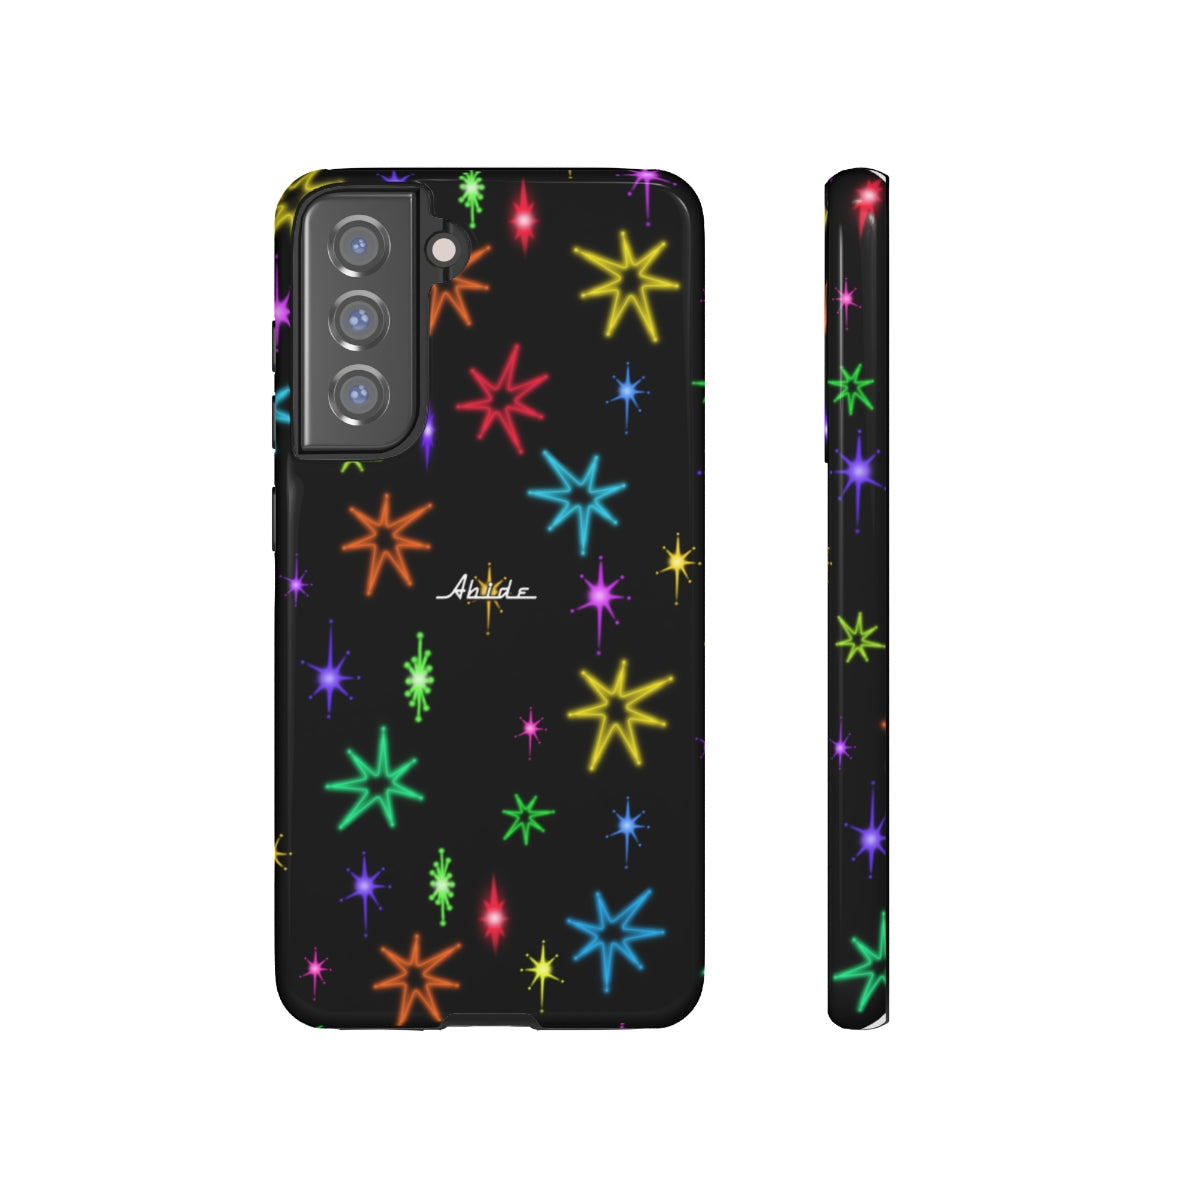 Lebowski's Neon Stars | Smart Phone cover Tough Case